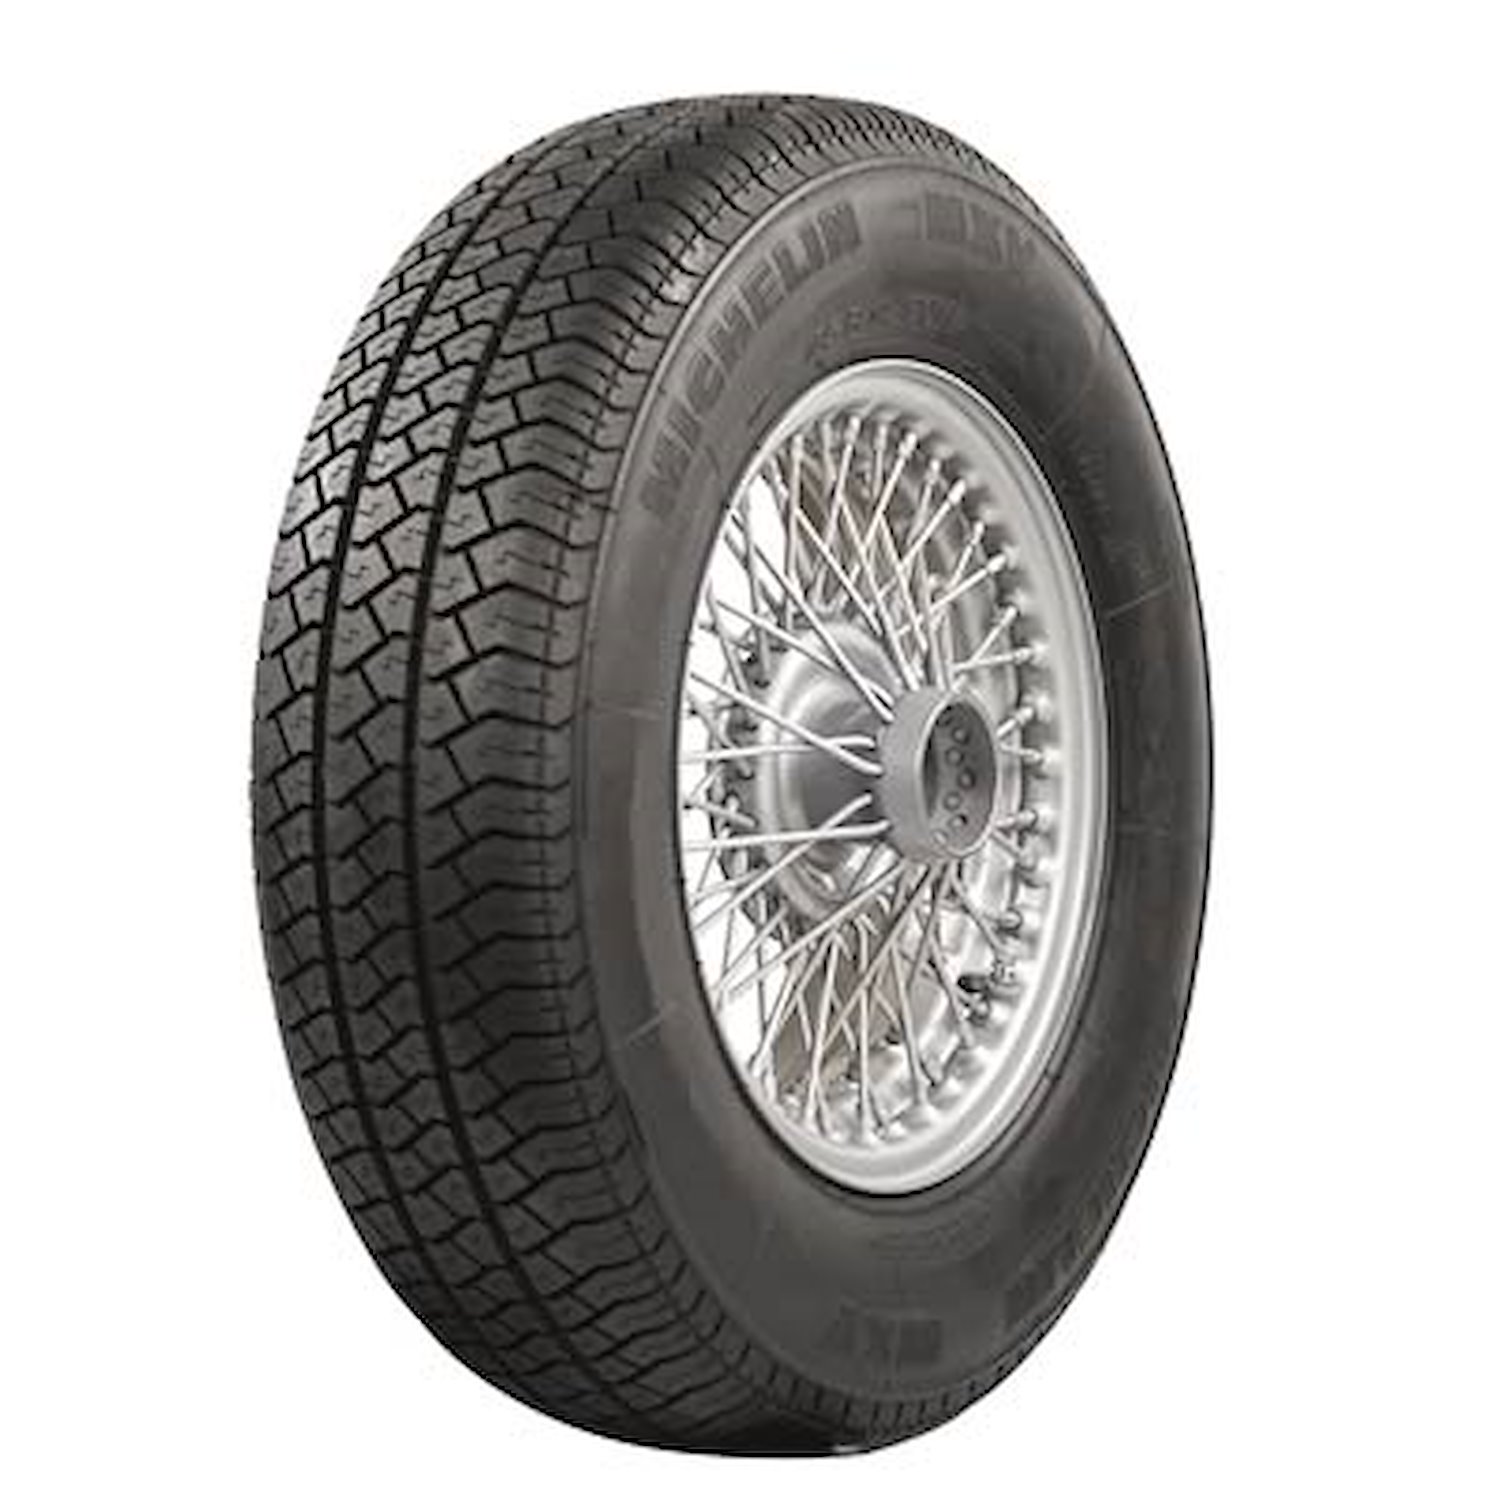 629707 Tire, Michelin MXV, 185R14 90H